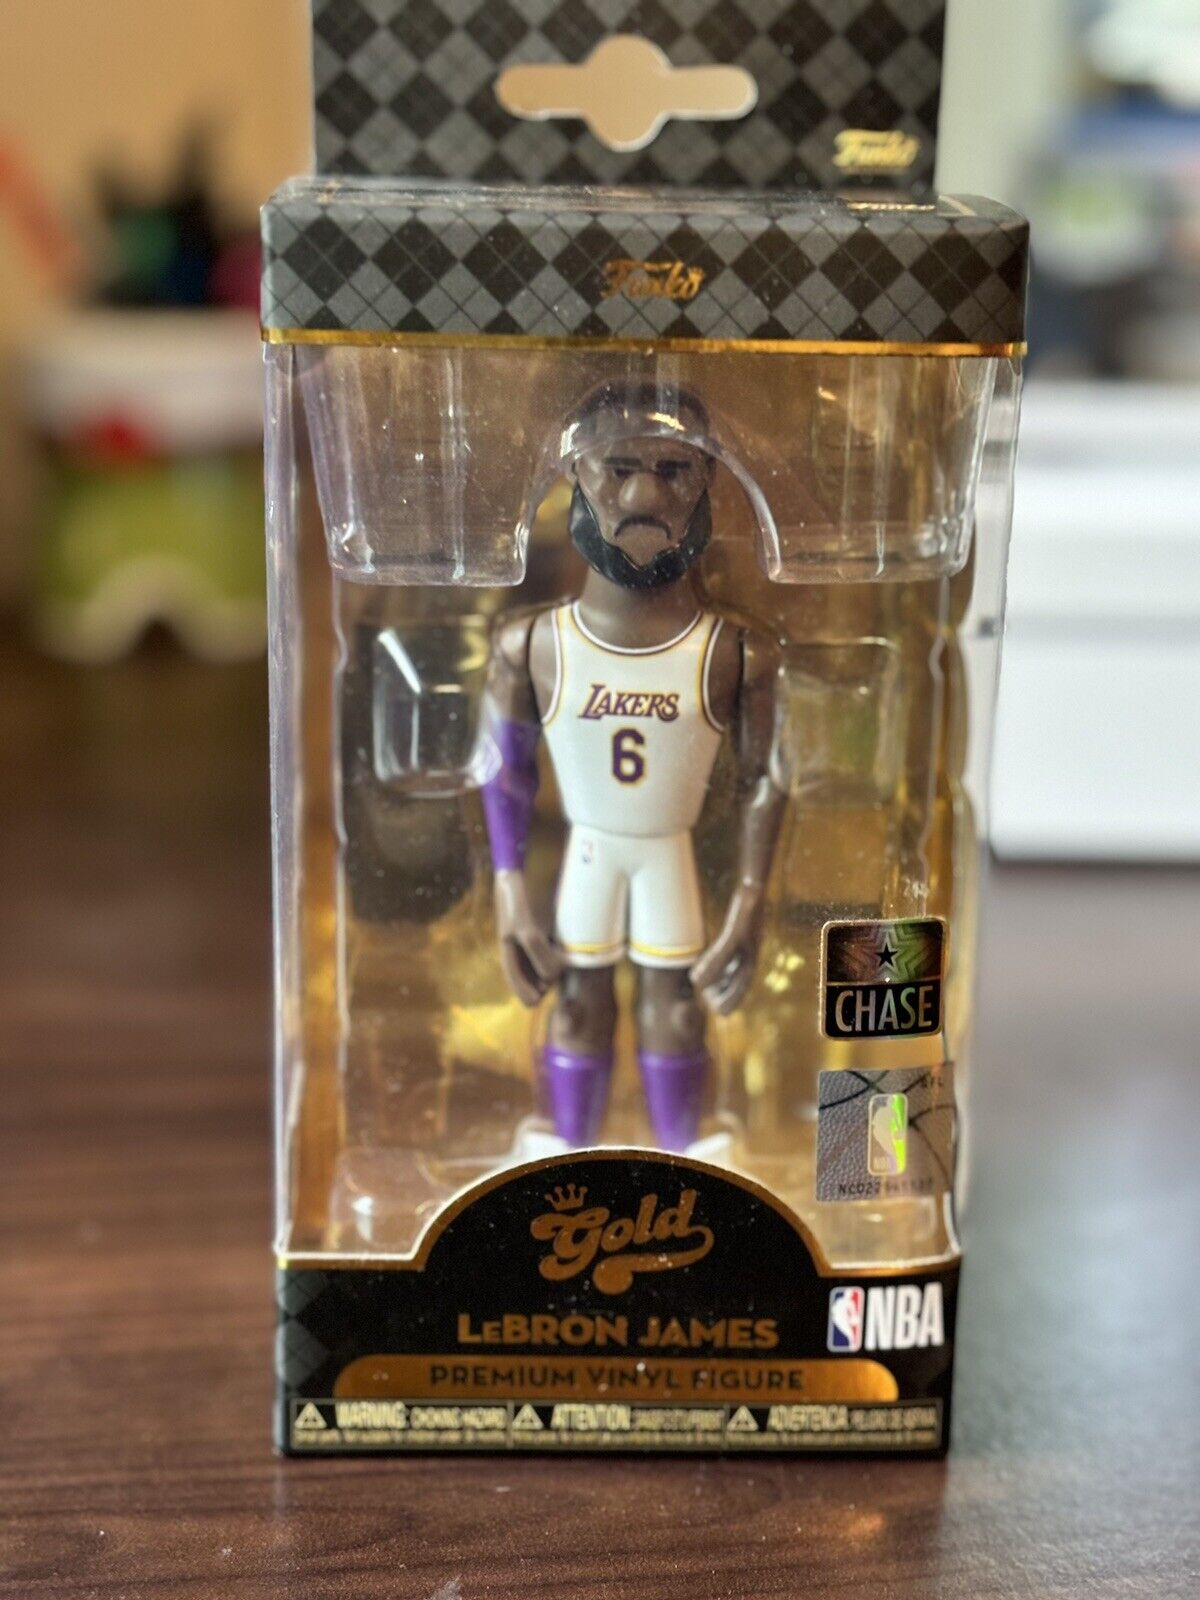 Funko Gold LeBron James 5” Premium Vinyl Figure Chase NBA Lakers White Jersey #6